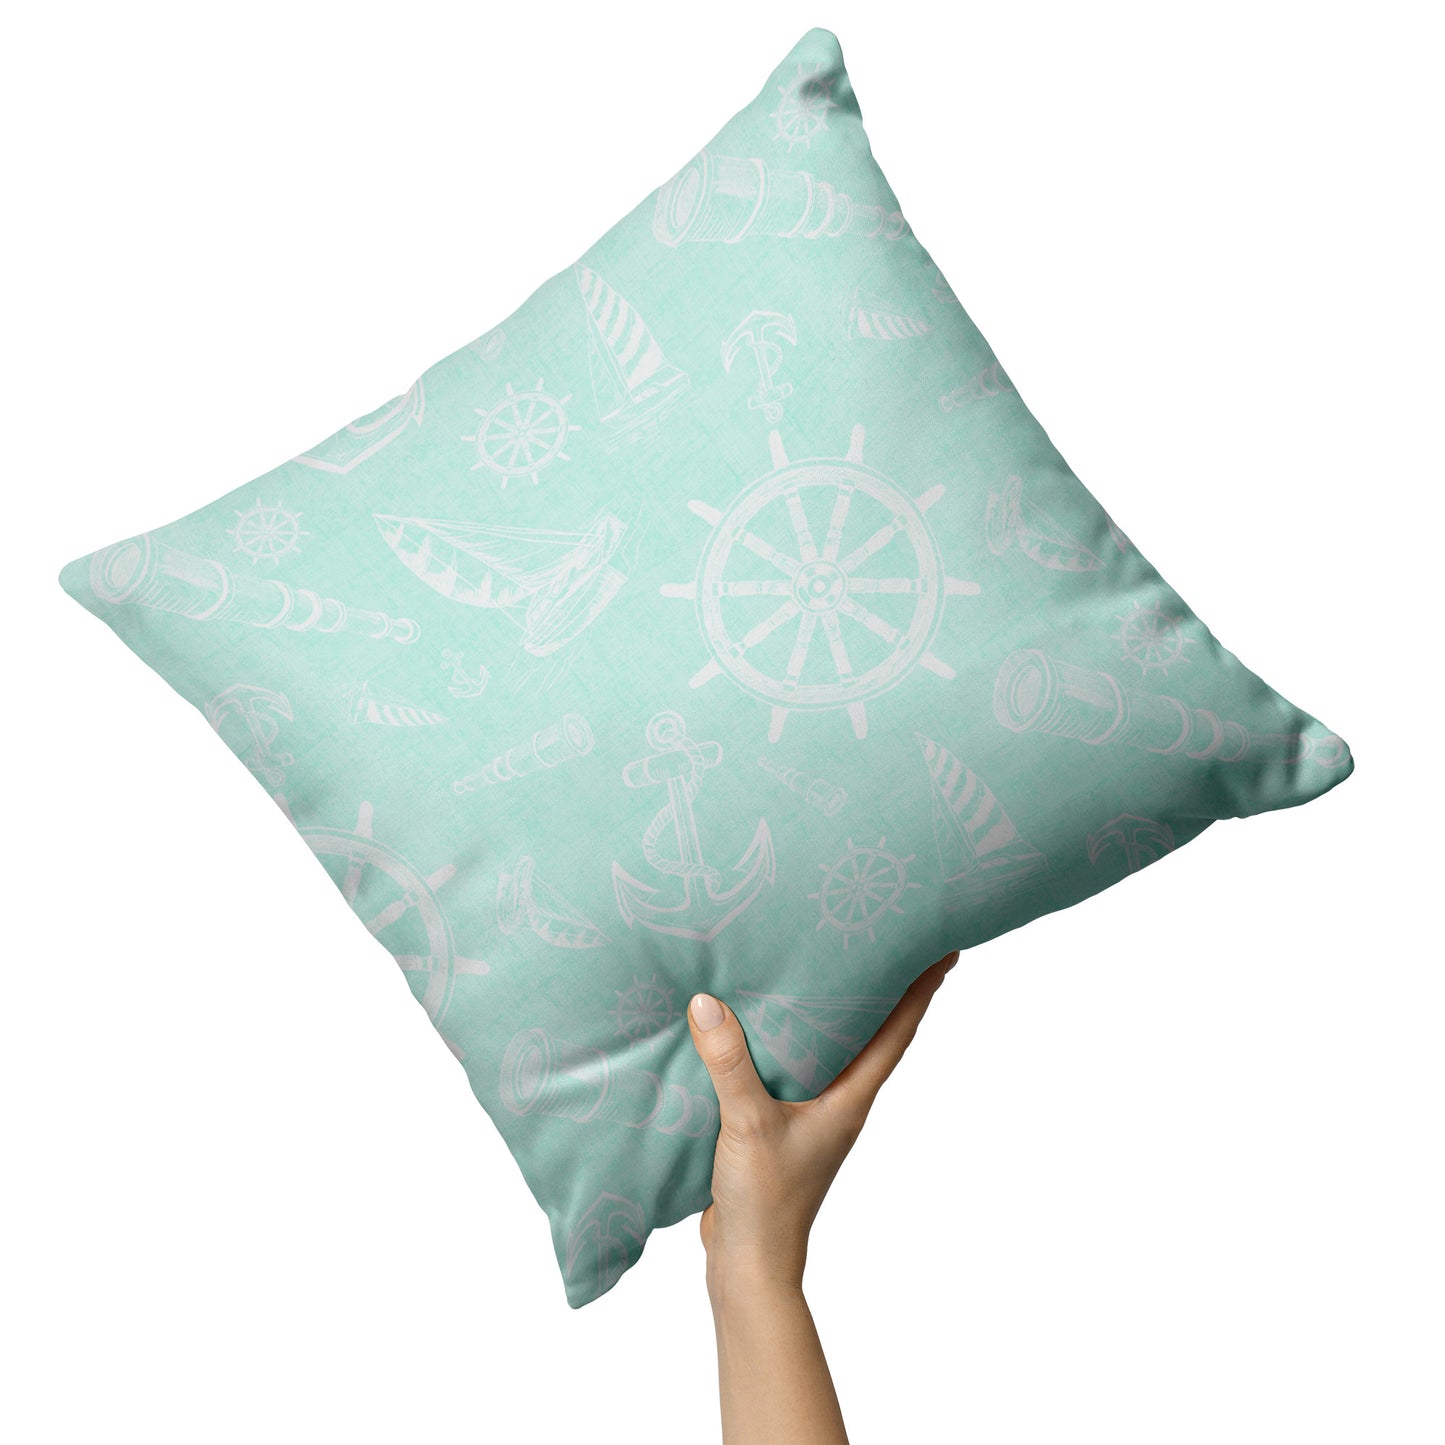 Nautical Sketches Design on Mint Linen Textured Background, Throw Pillow